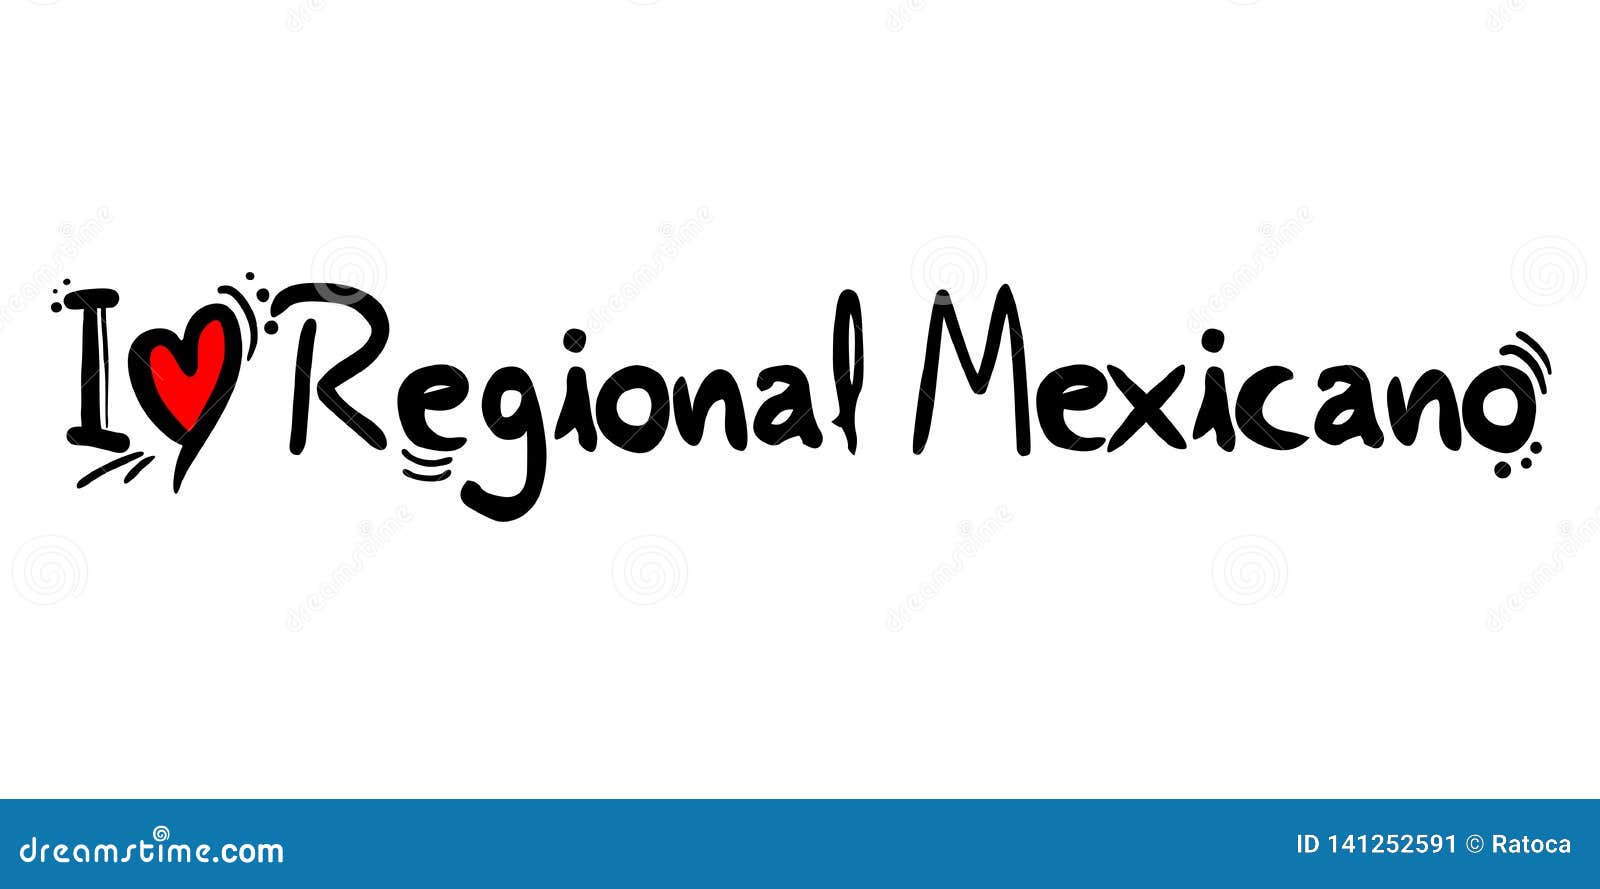 regional mexicano music love message